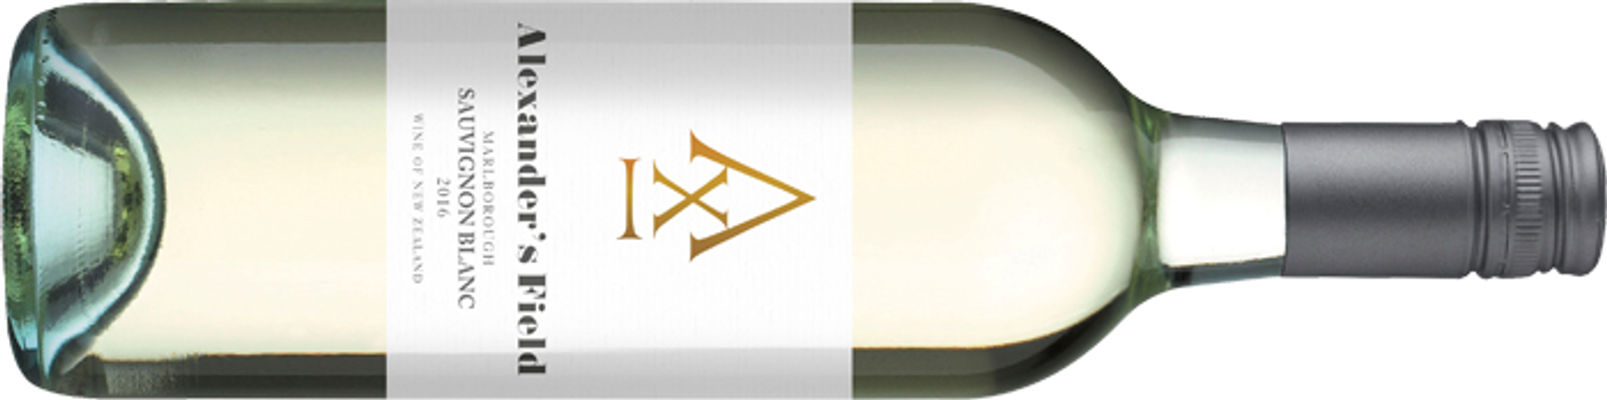 Alexanders Field Marlb Sauvignon Blanc (12 Bottles)